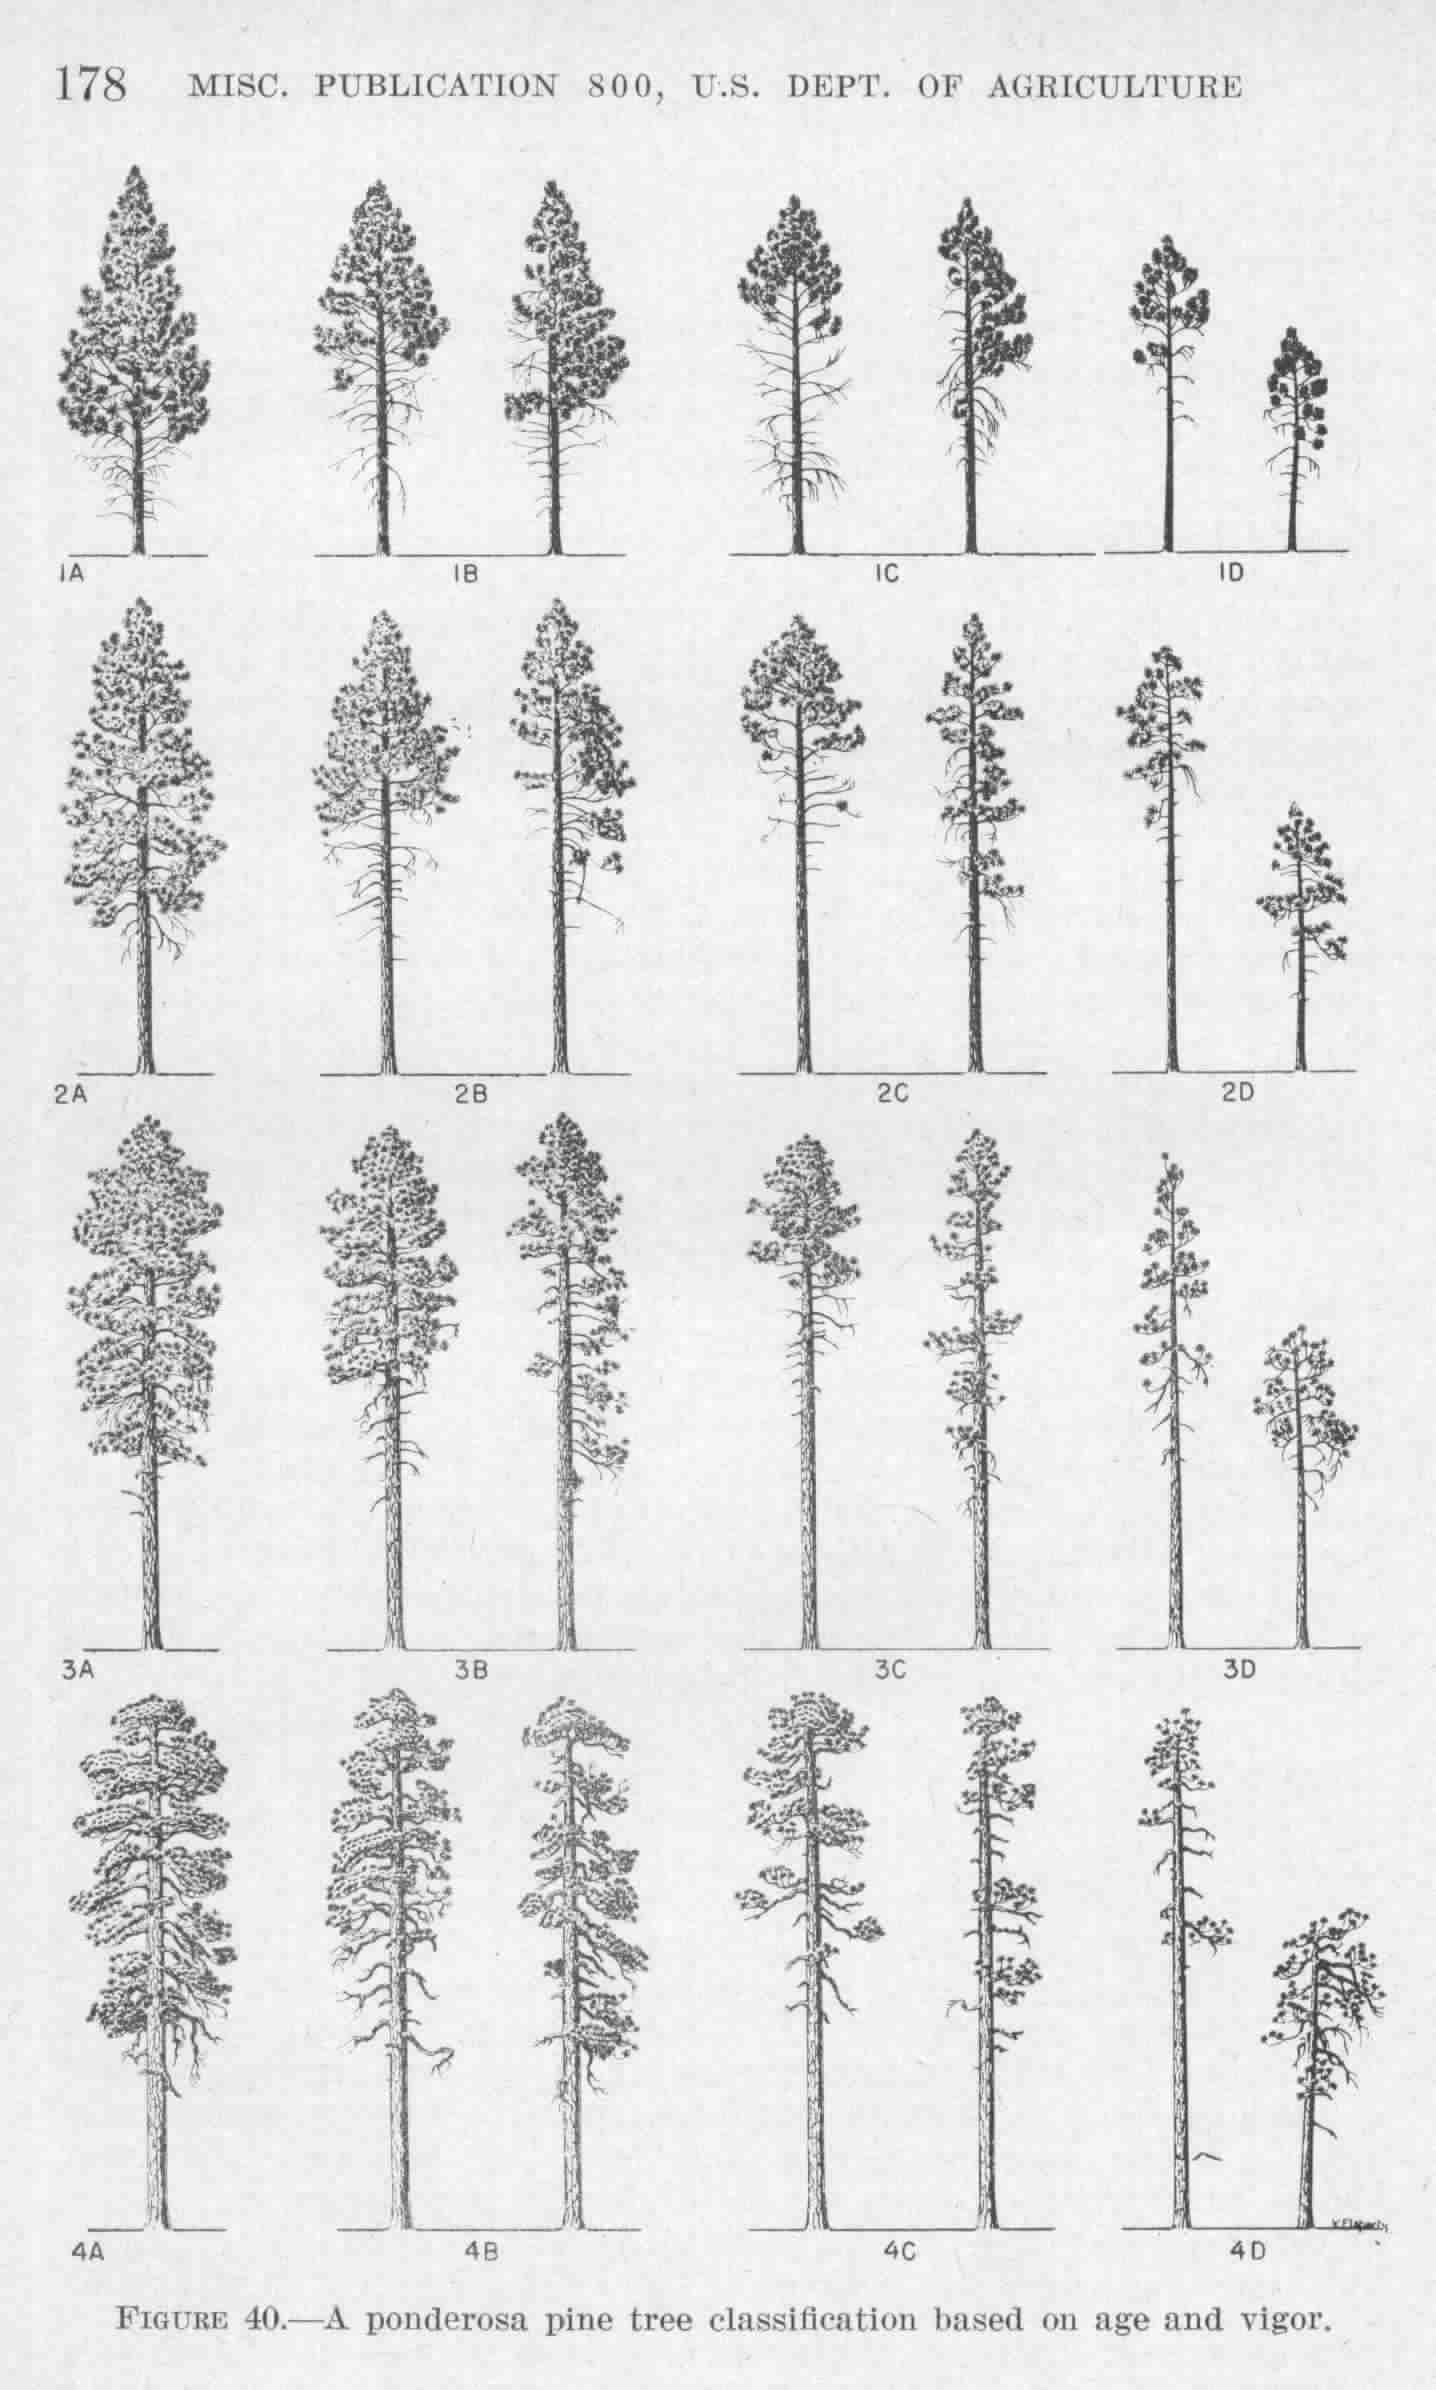 Keen's tree classification for ponderosa pine